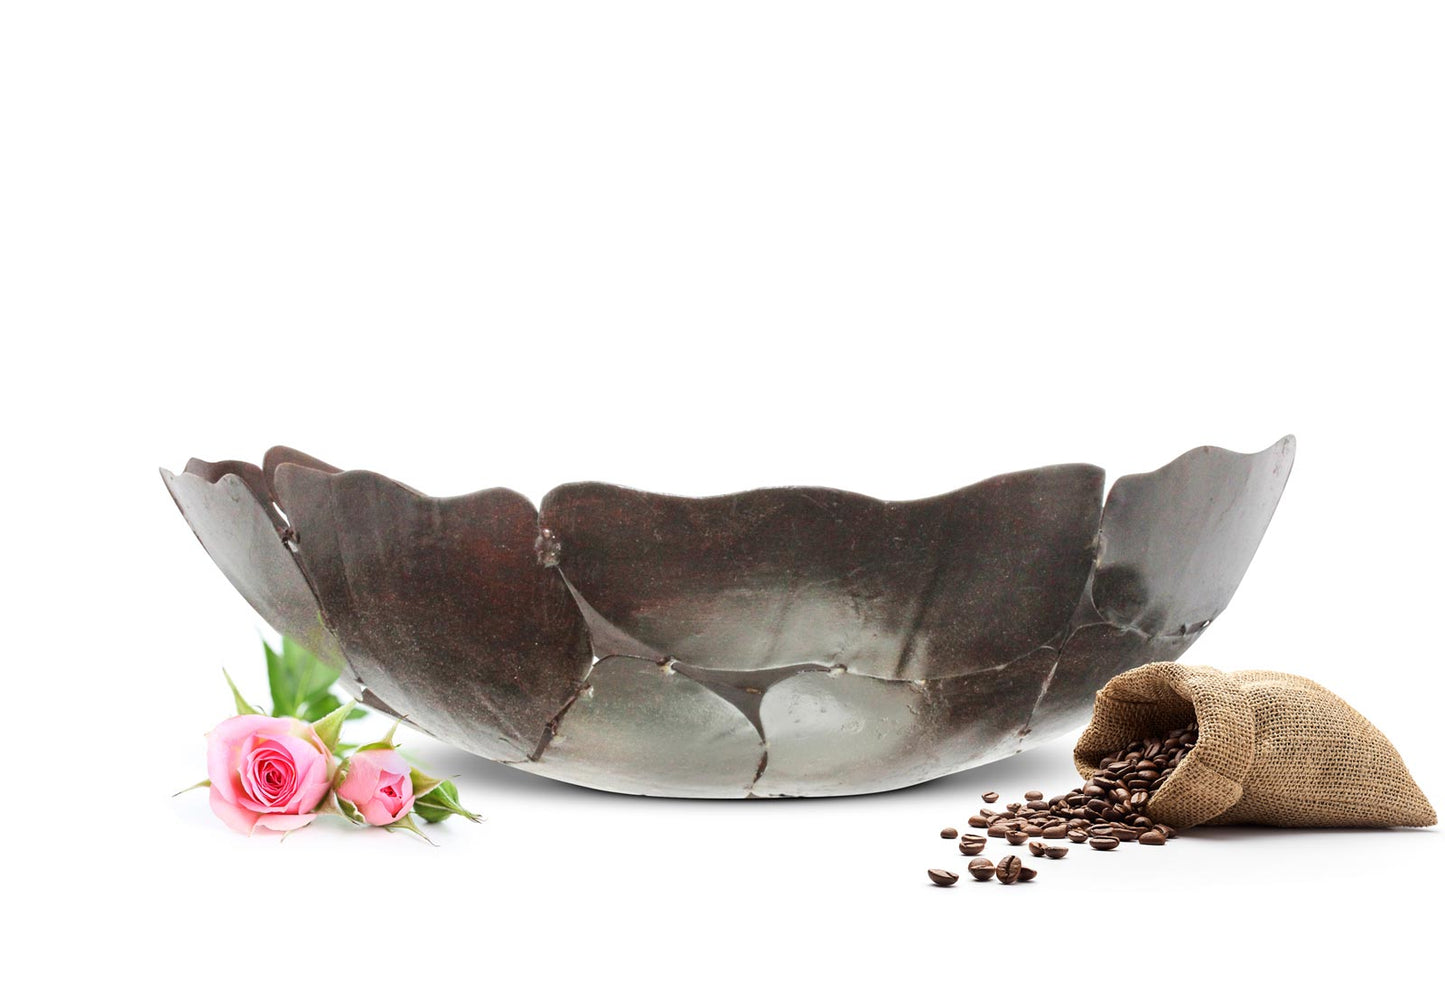 Grand bol en métal bol décoratif panier en métal bol à fruits décoration de table marron